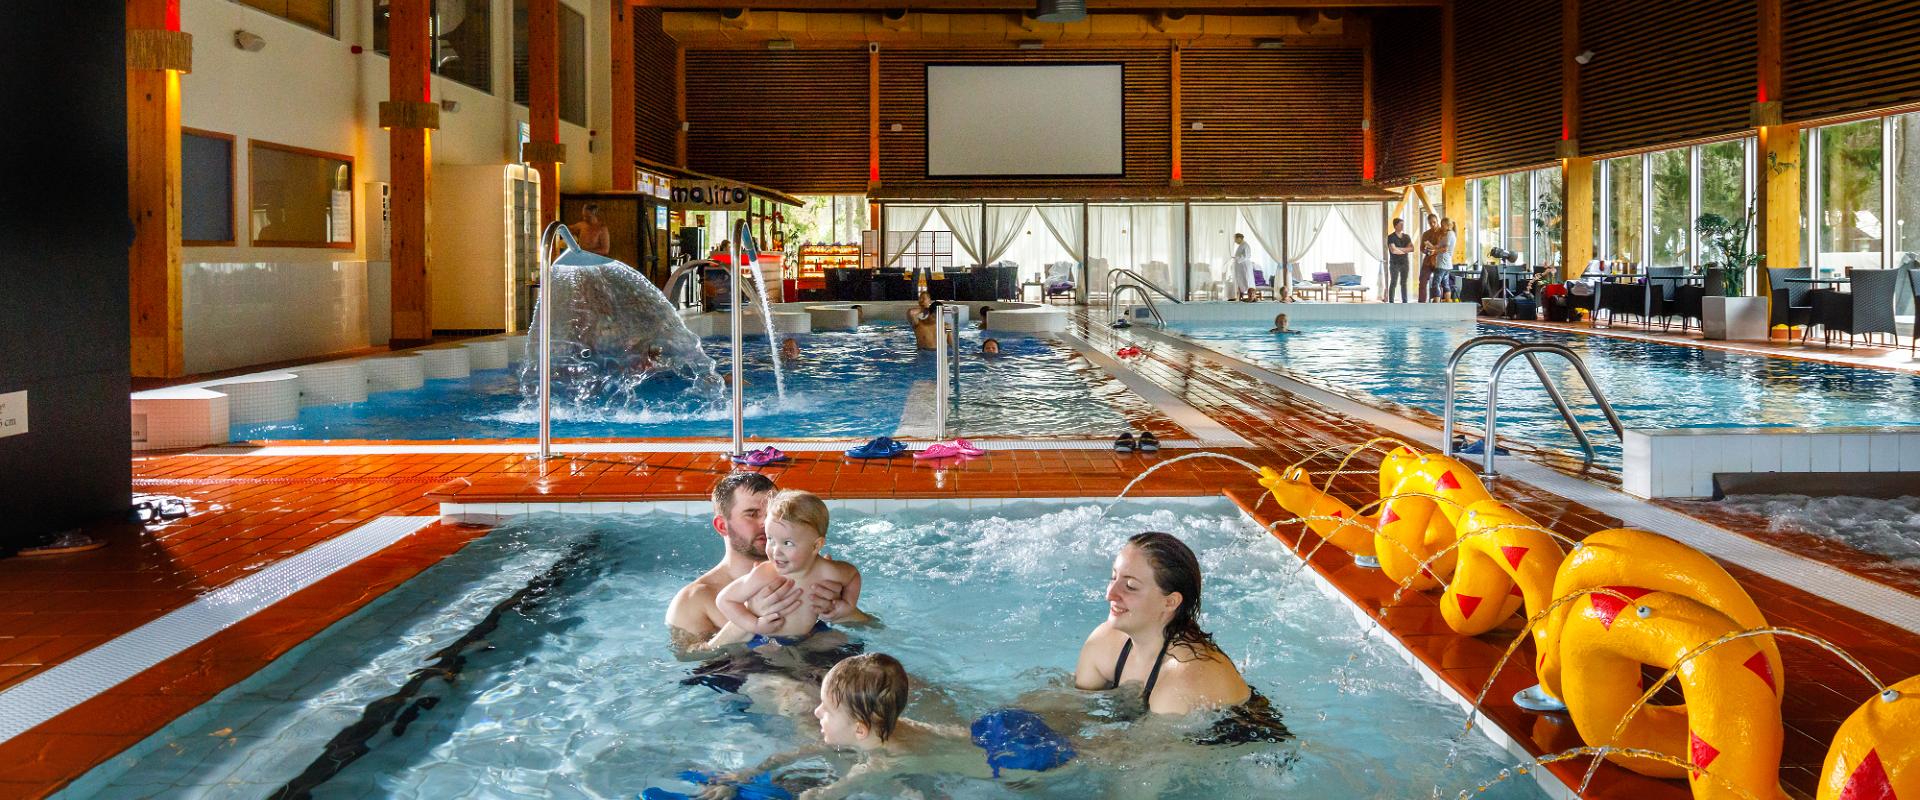 Meresuu Spa & Hotel – water and sauna centre